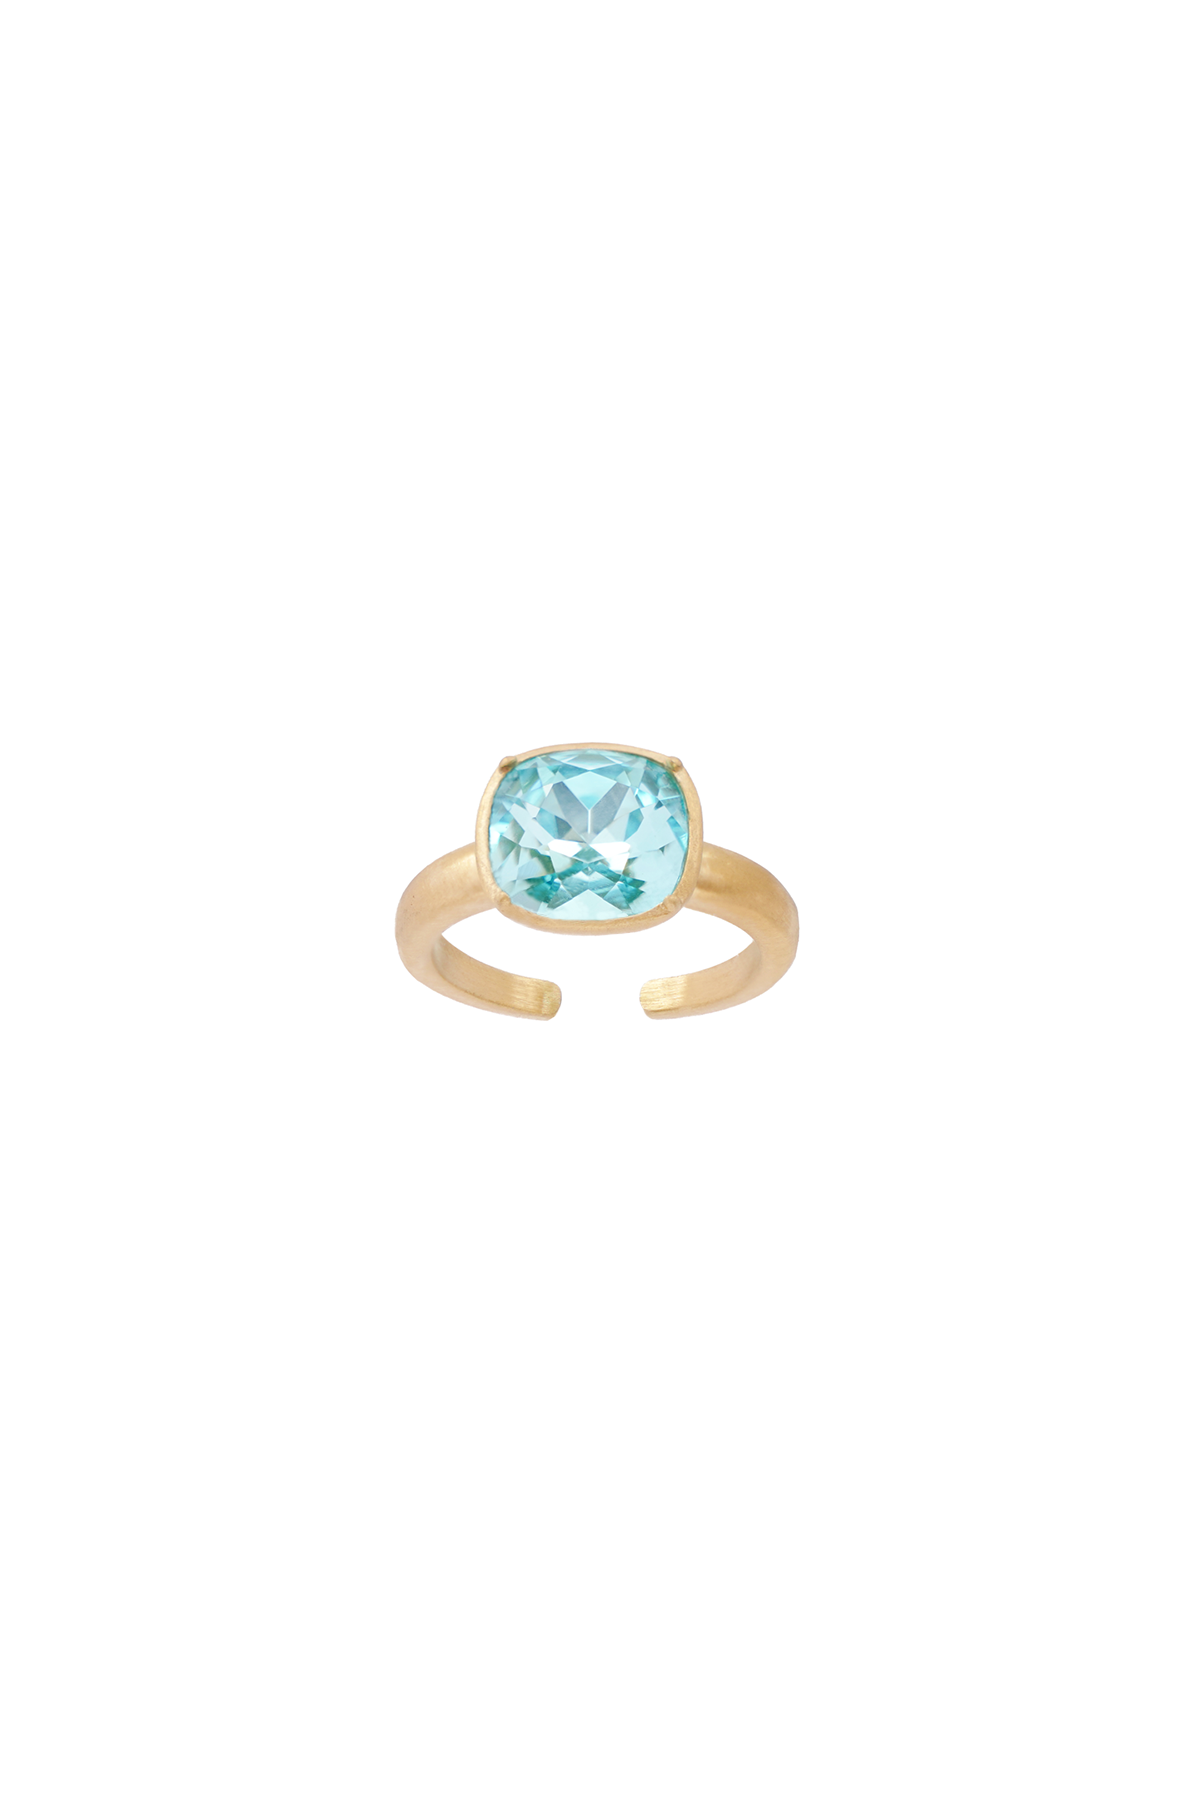 Carla Crystal ring - Ocean blue, Adjustable